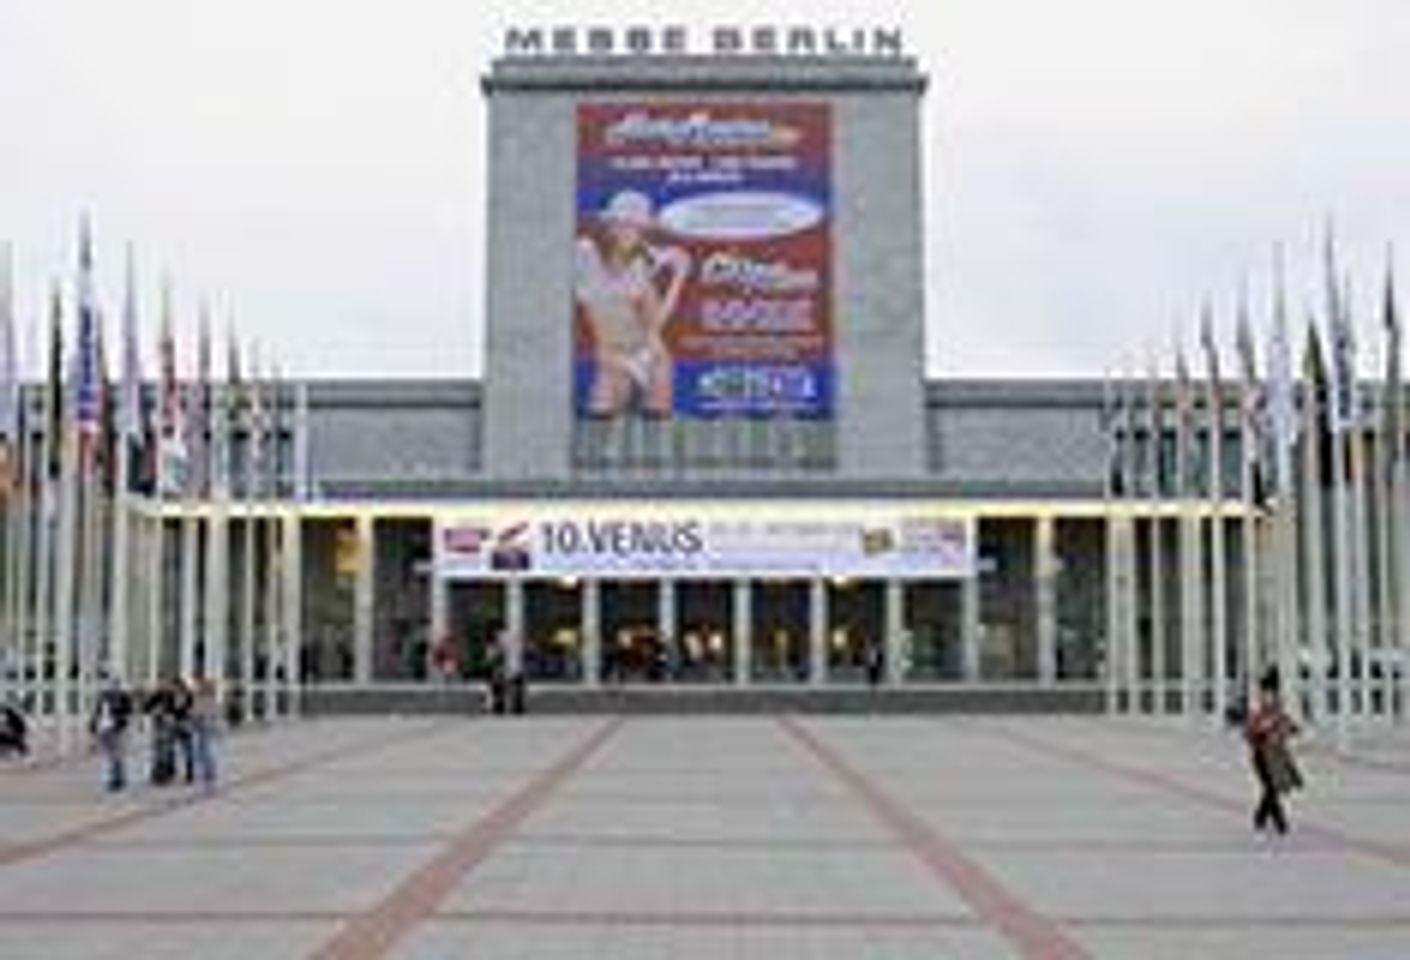 Venus Berlin Organizer Talks Expo Plans